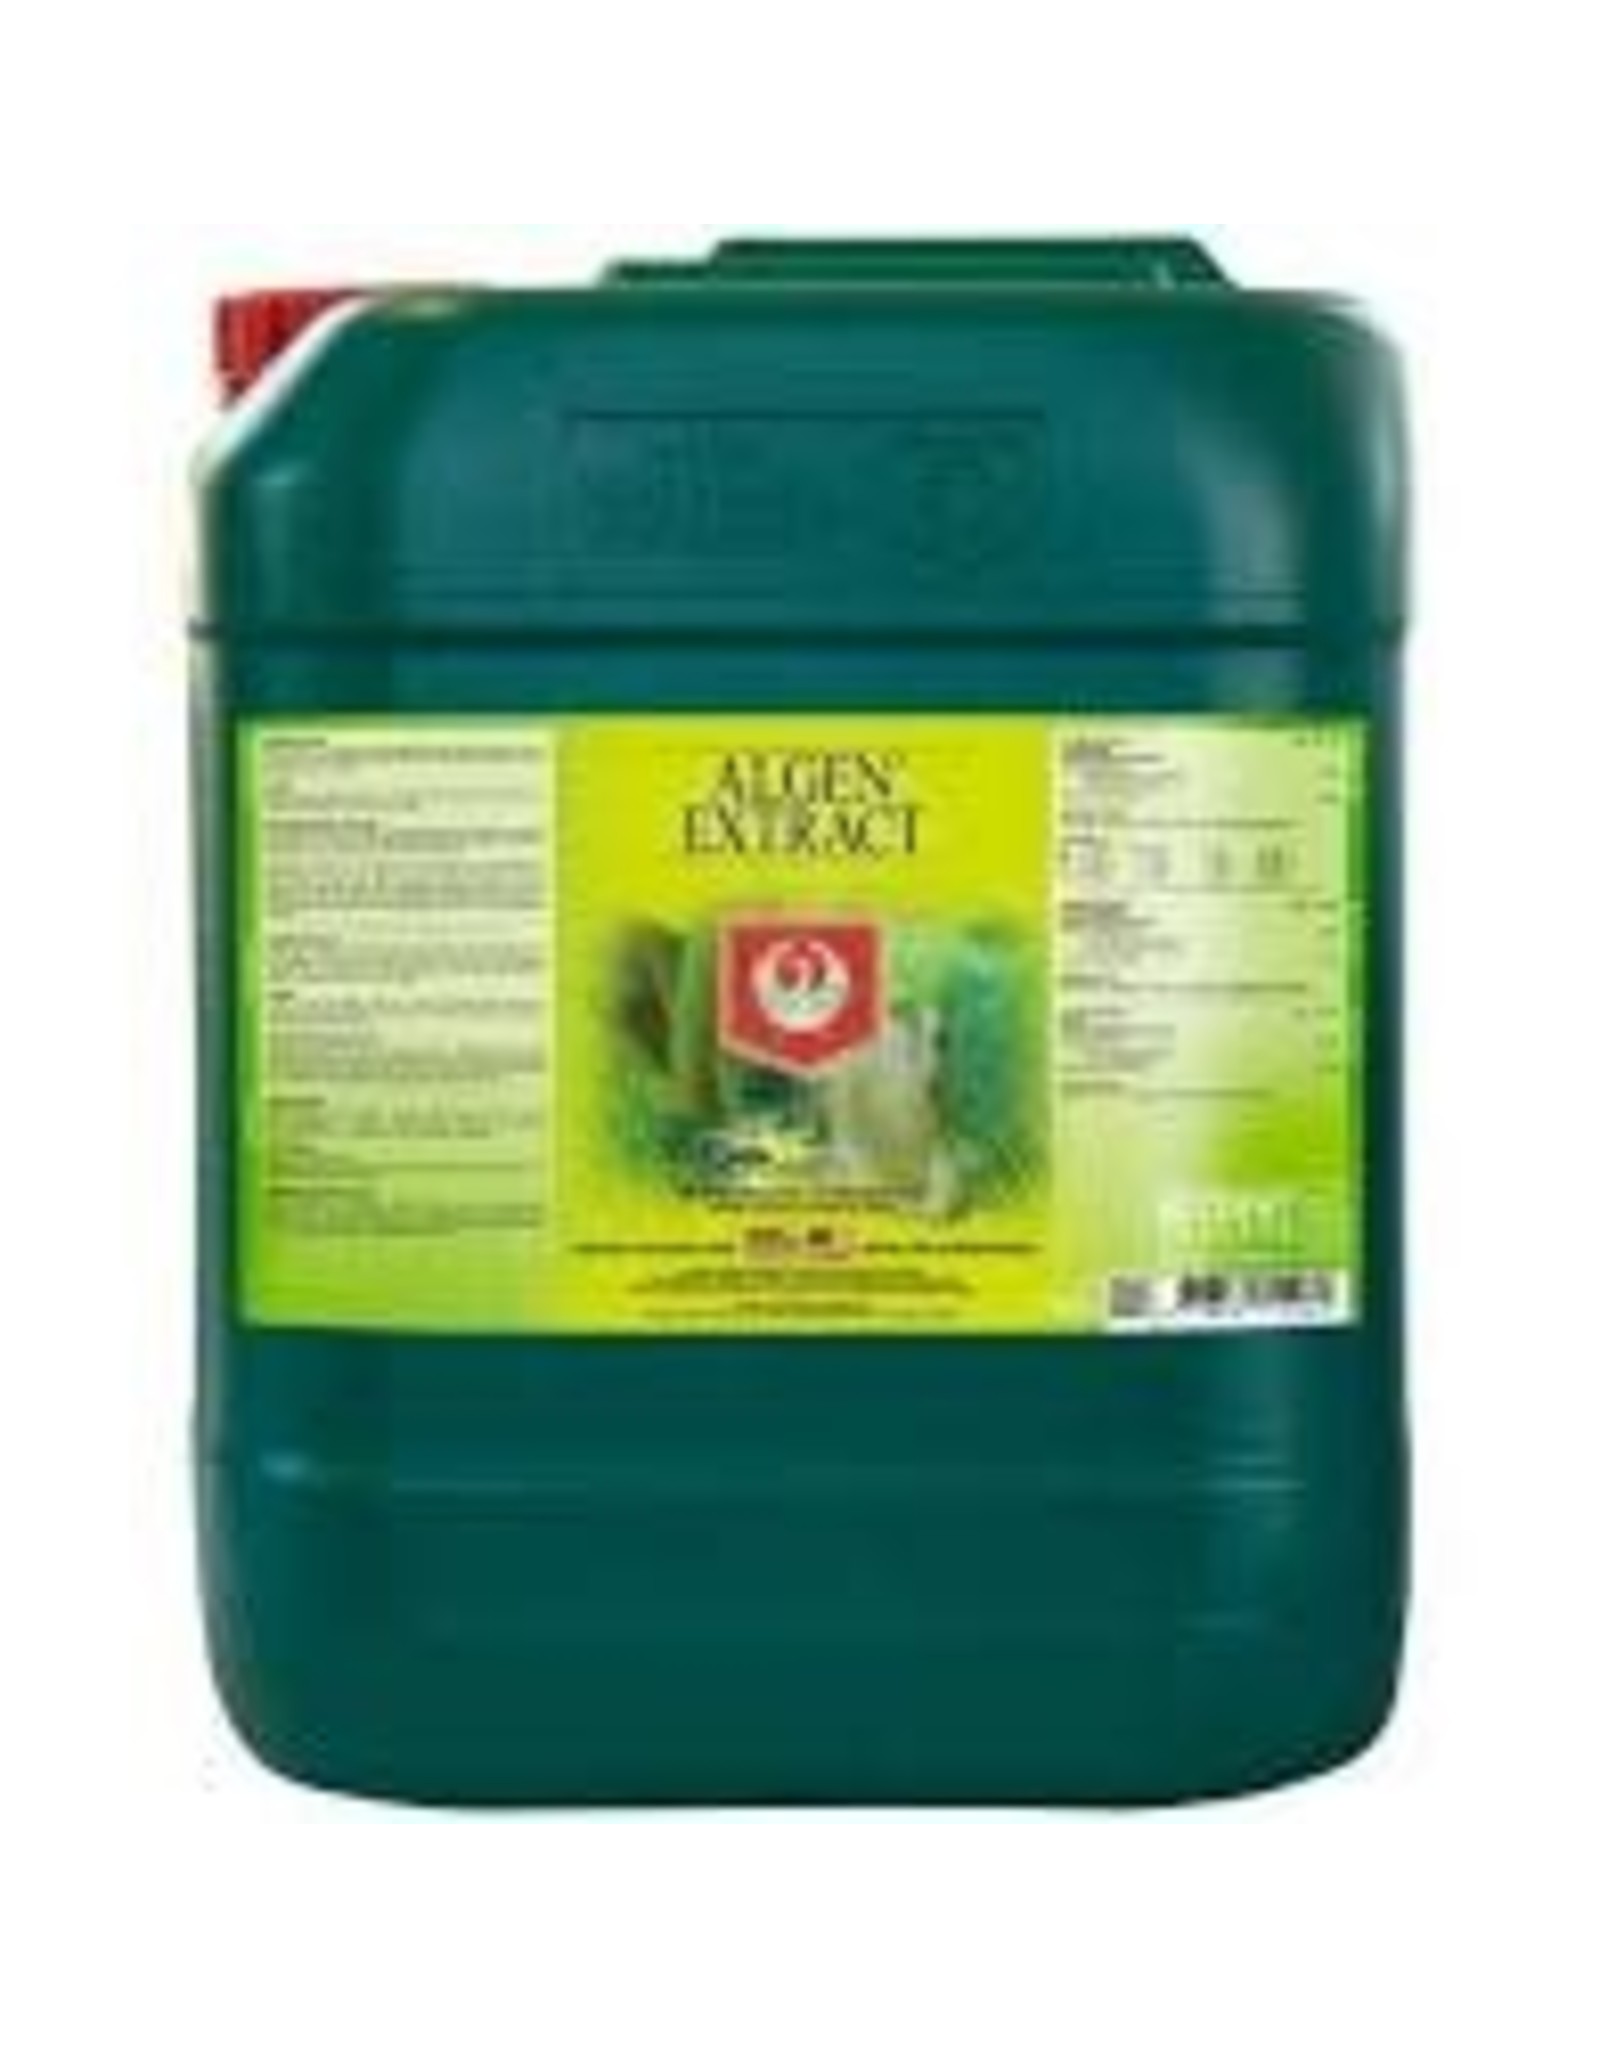 House & Garden House and Garden Algen Extract 5 Liter